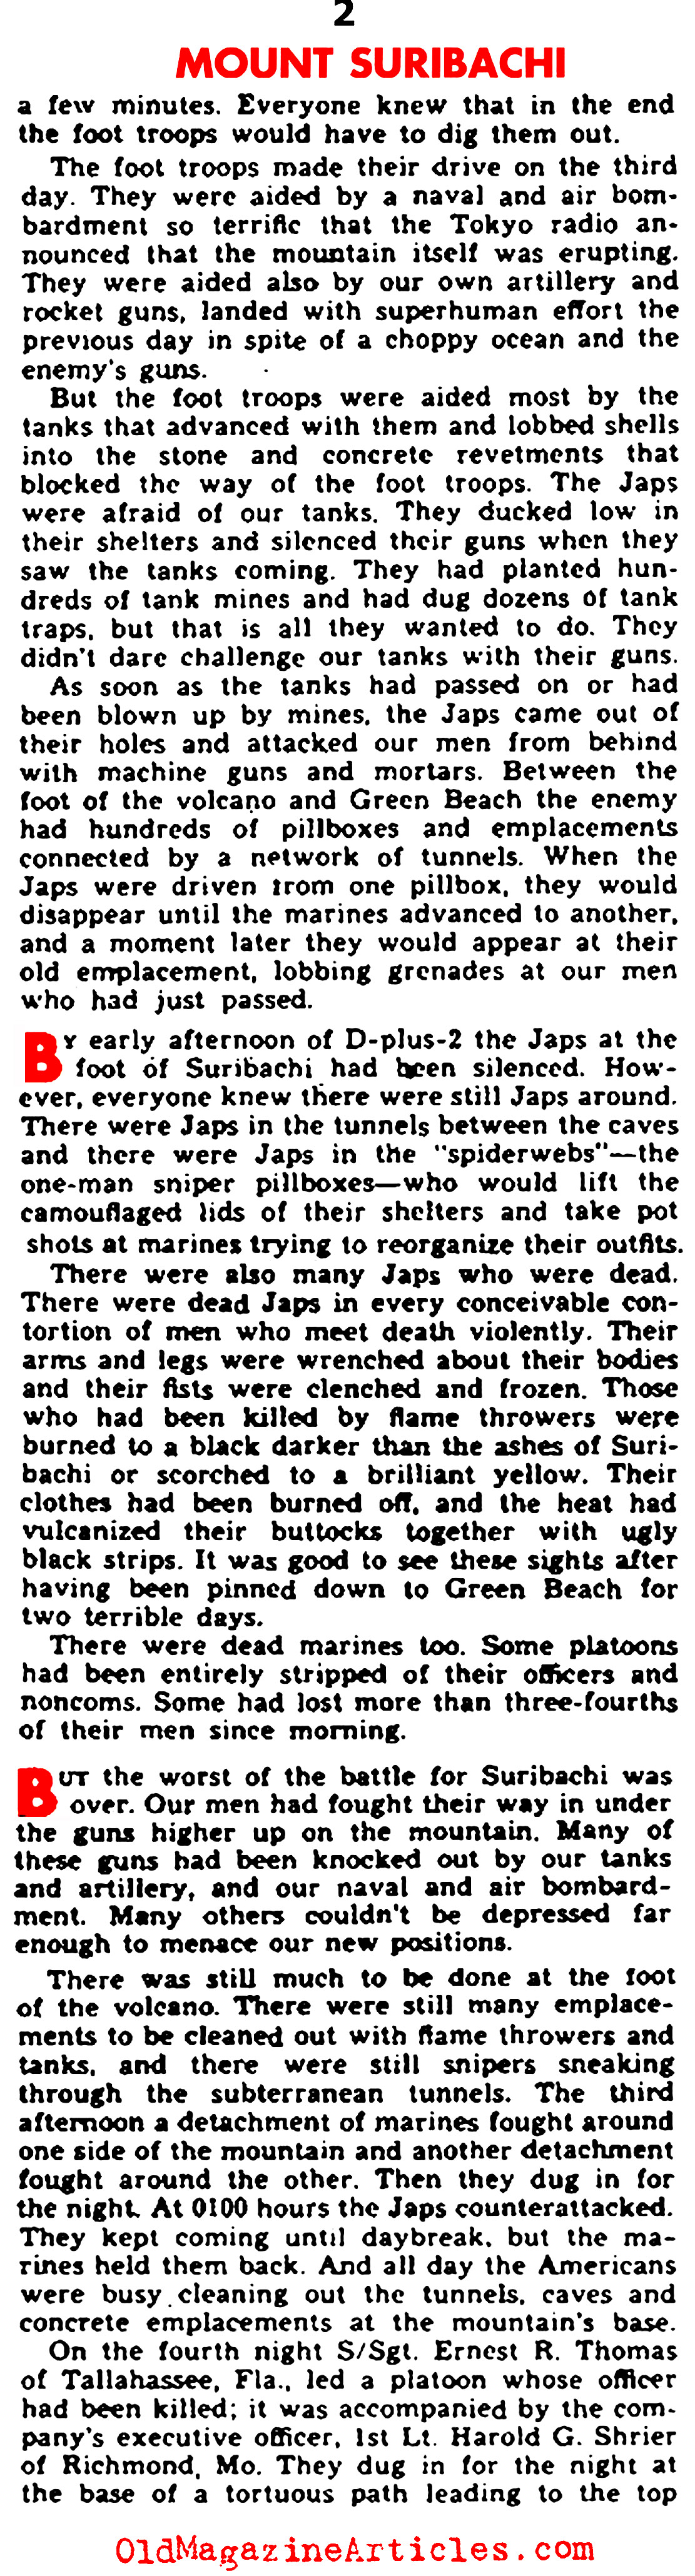 The Battle of Iwo Jima and the First Flag Raising on Mount Suribachi (Yank Magazine, 1945)